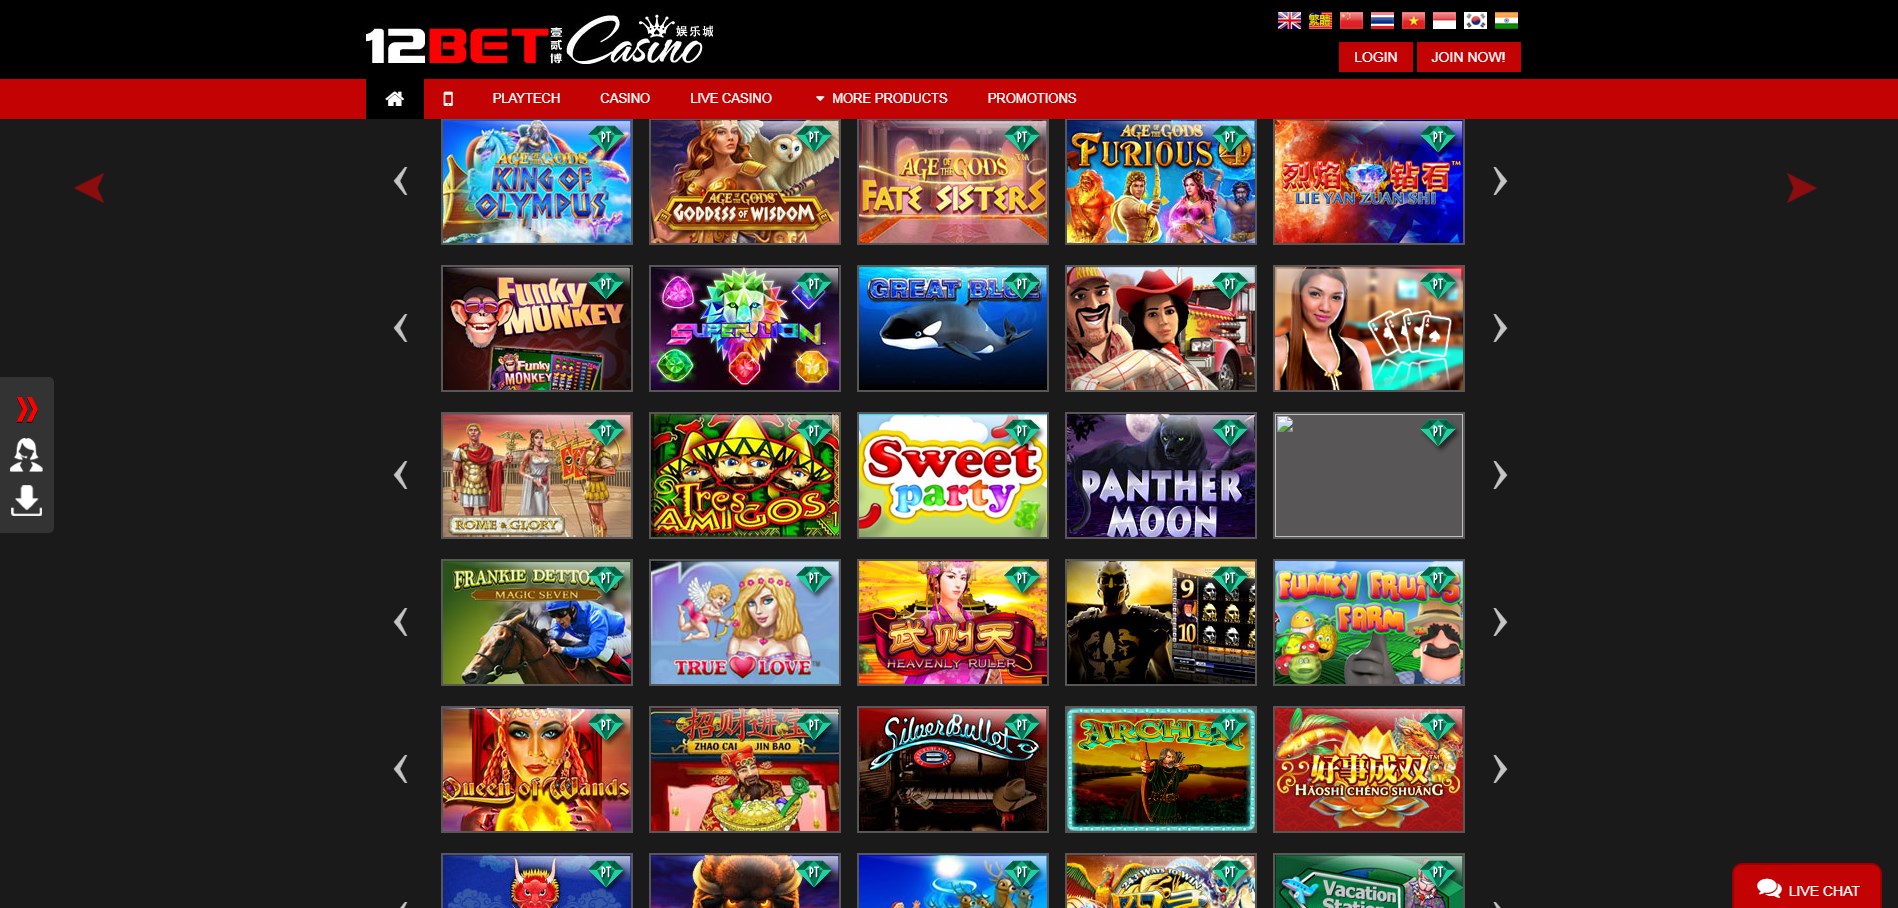 12 Bet Casino Games